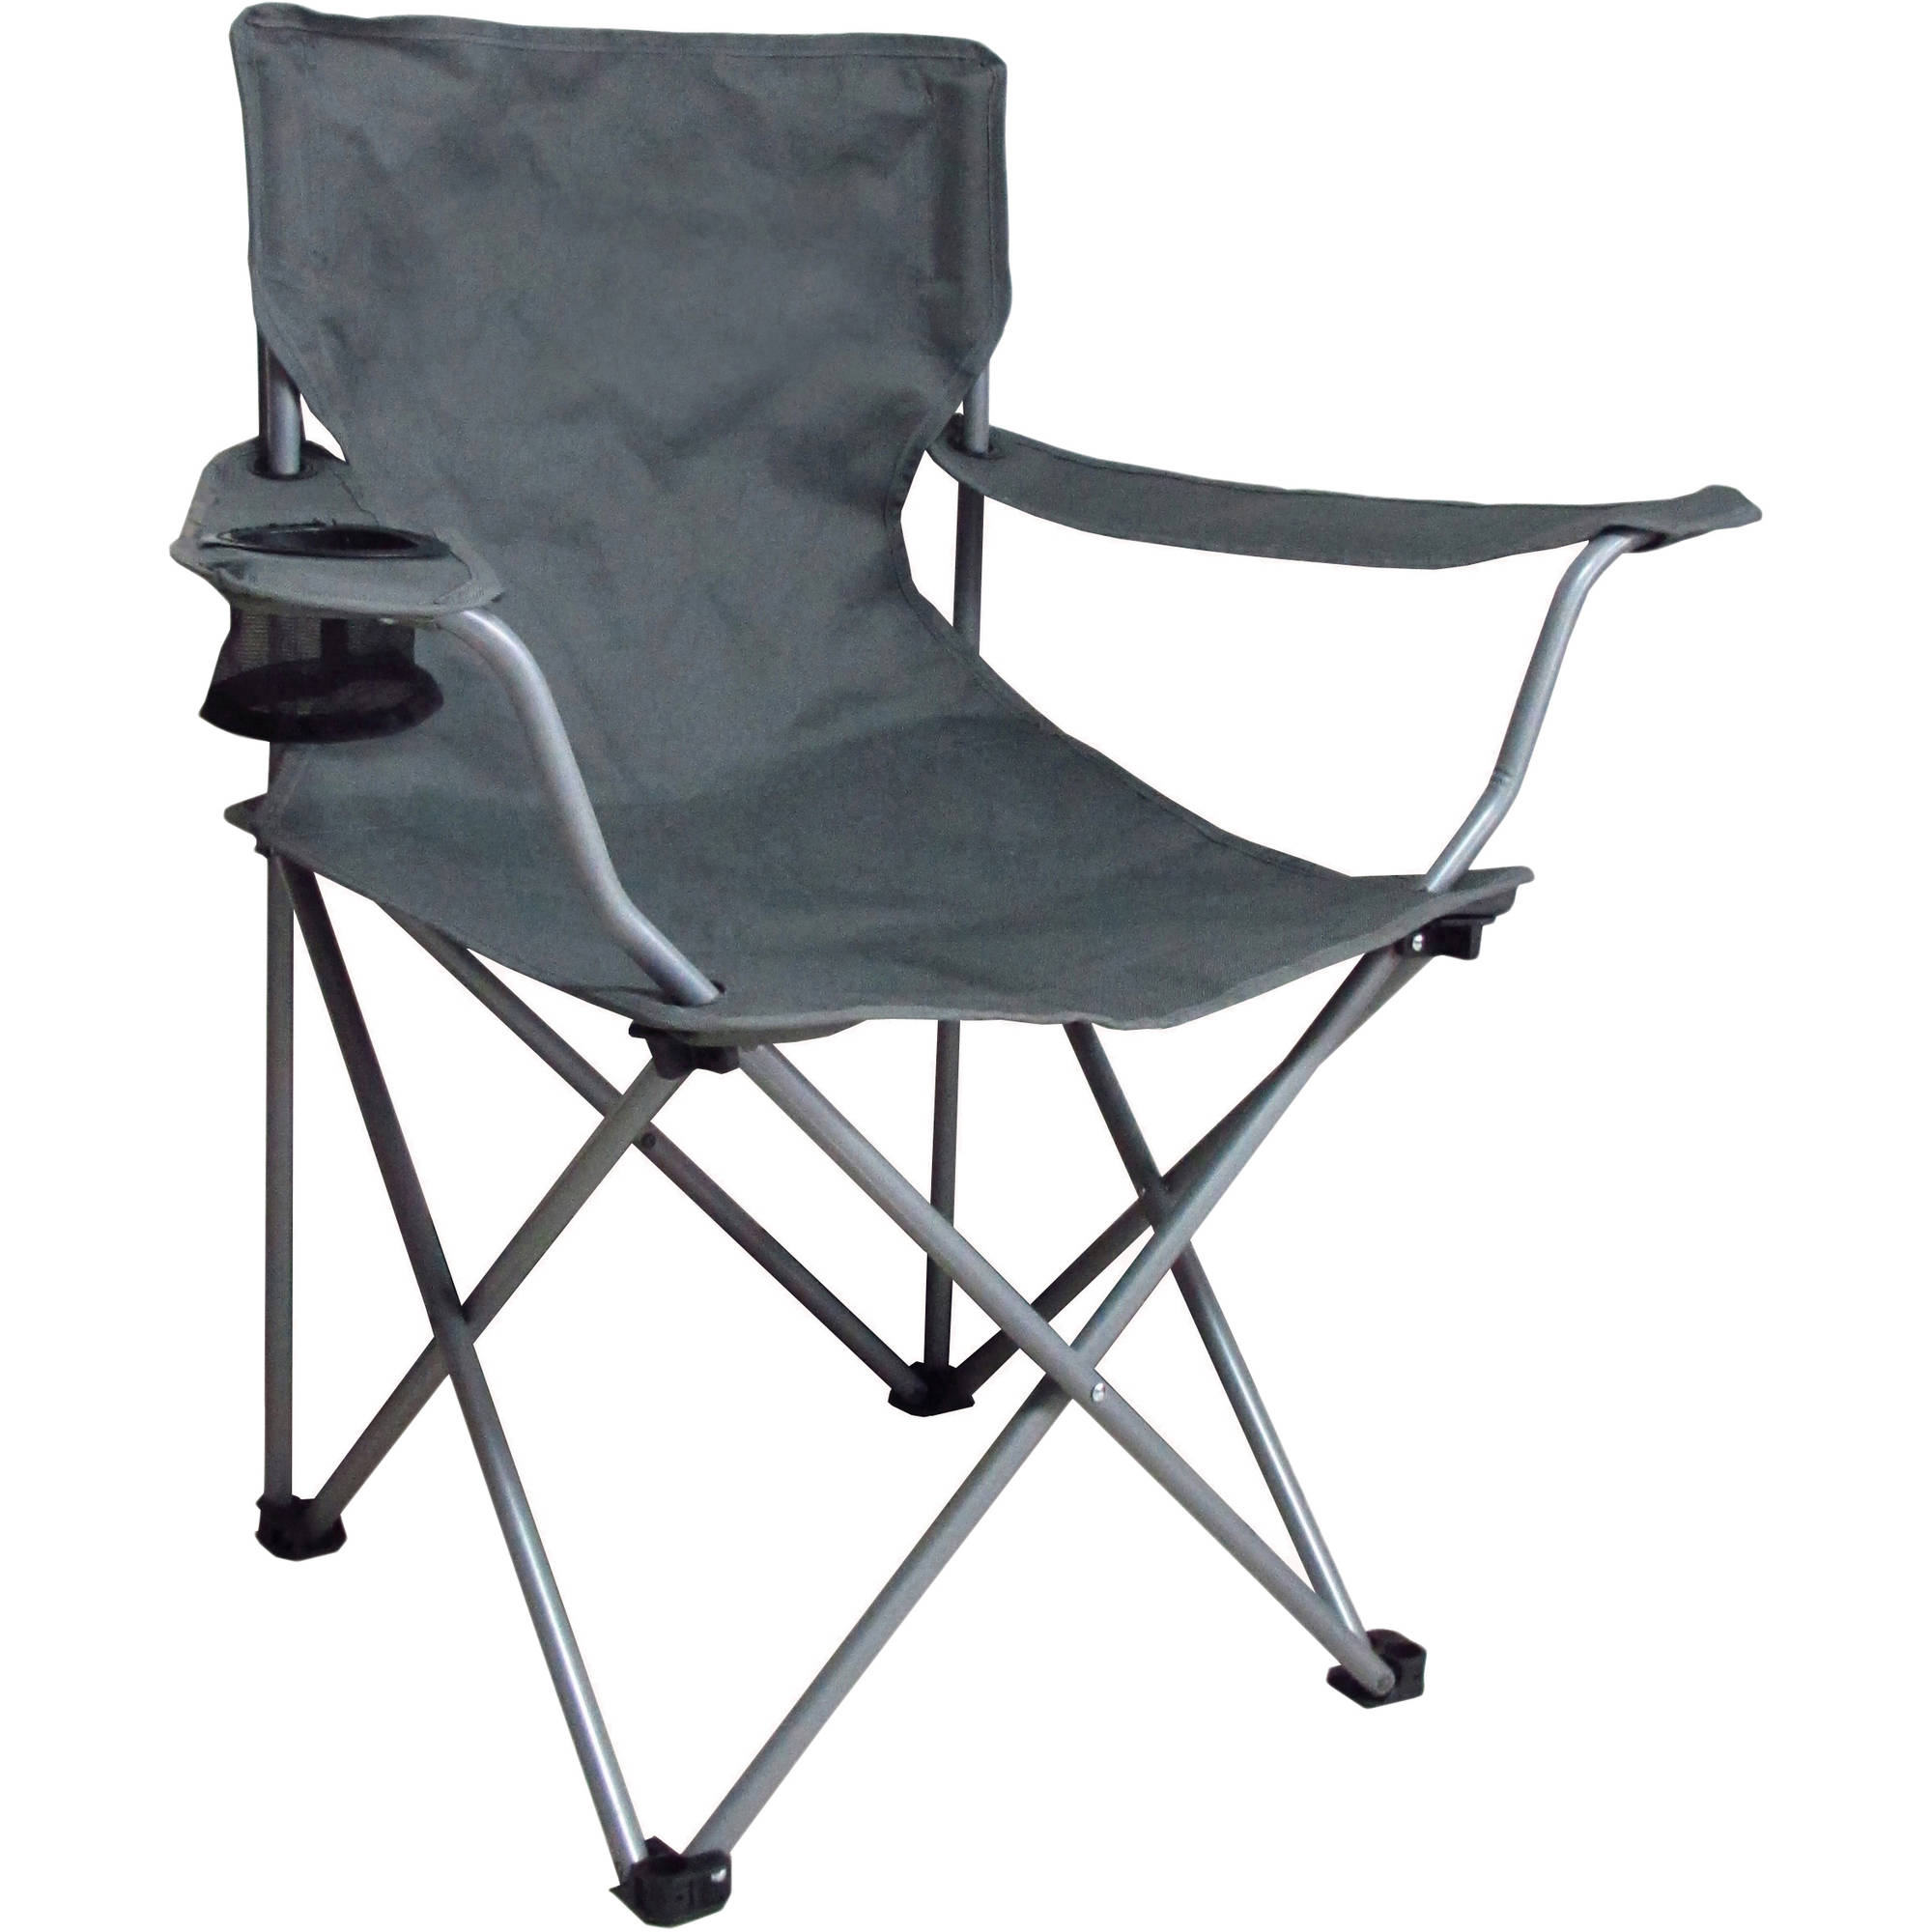 Ozark Trail Folding Chair - image 1 of 1